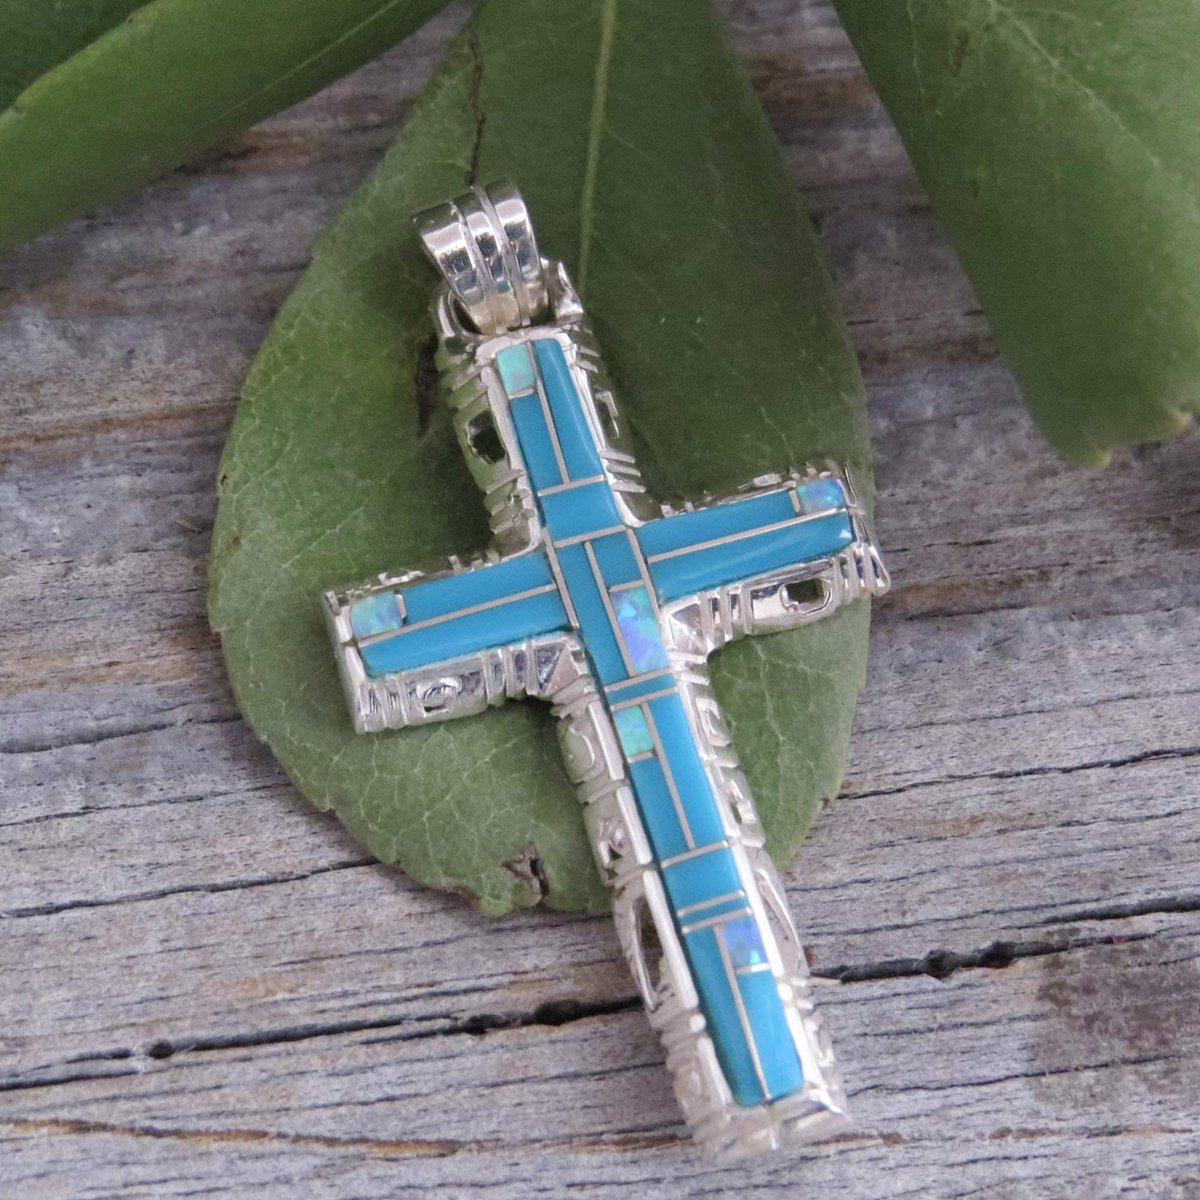 Walk in Faith with this stunning Turquoise Cross Pendant
SAVE 30%  SHOP HERE: etsy.me/3JLrqqJ   #etsyjewelry #etsyshop 
#crosspendant #crossjewelry #turquoisecross #silvercross #religiousgift #christiancross #religiousjewelry #kokopellitraders